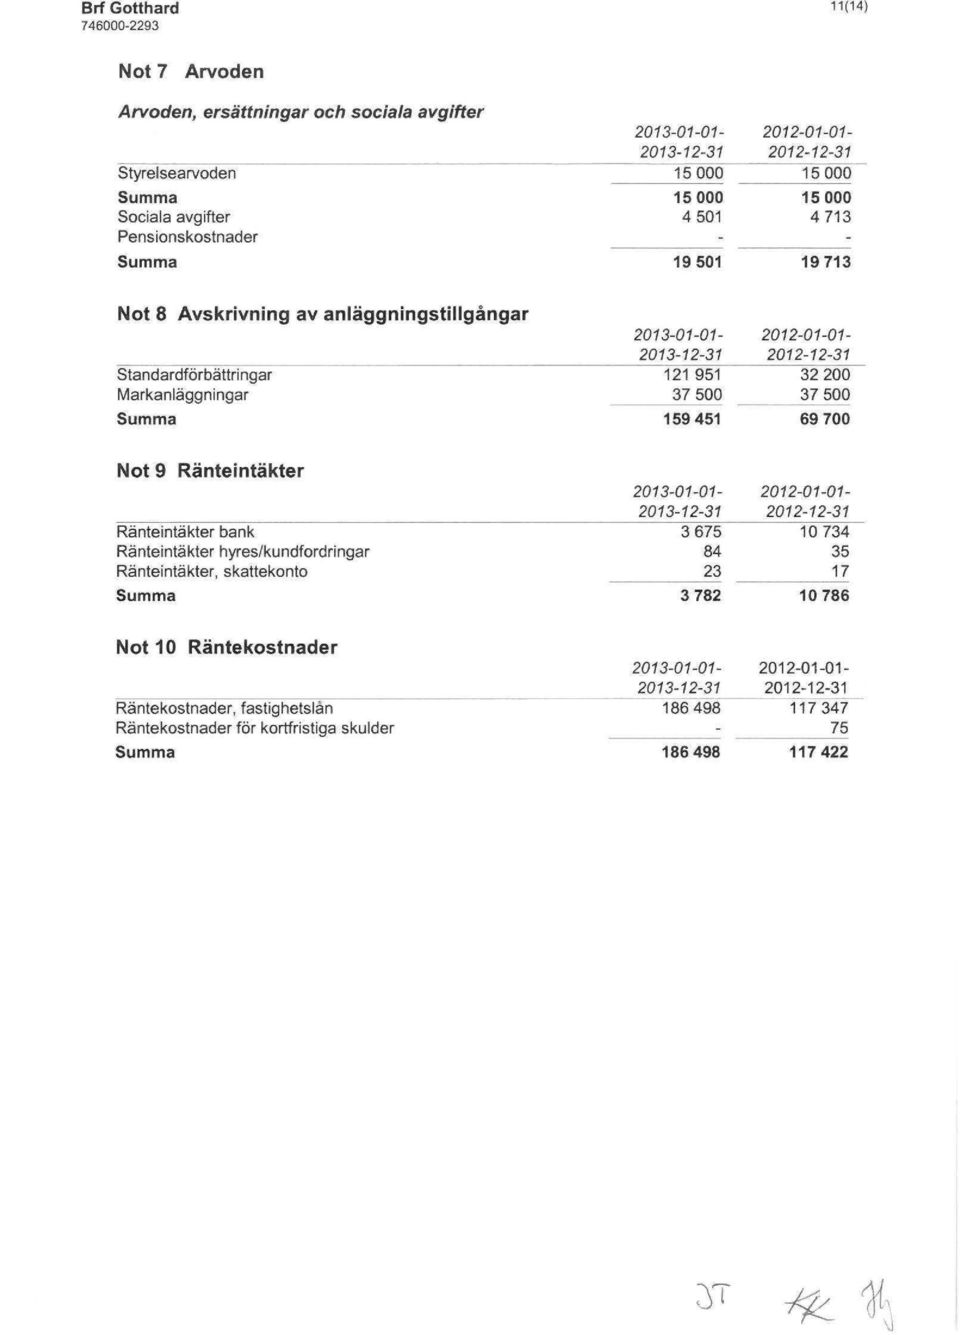 Ränteintäkter bank Ränteintäkter hyres/kundfordringar Ränteintäkter, skattekonto 2013-01-01-121 951 37500 32200 37500 2013-01-01-3675 84 23 3782